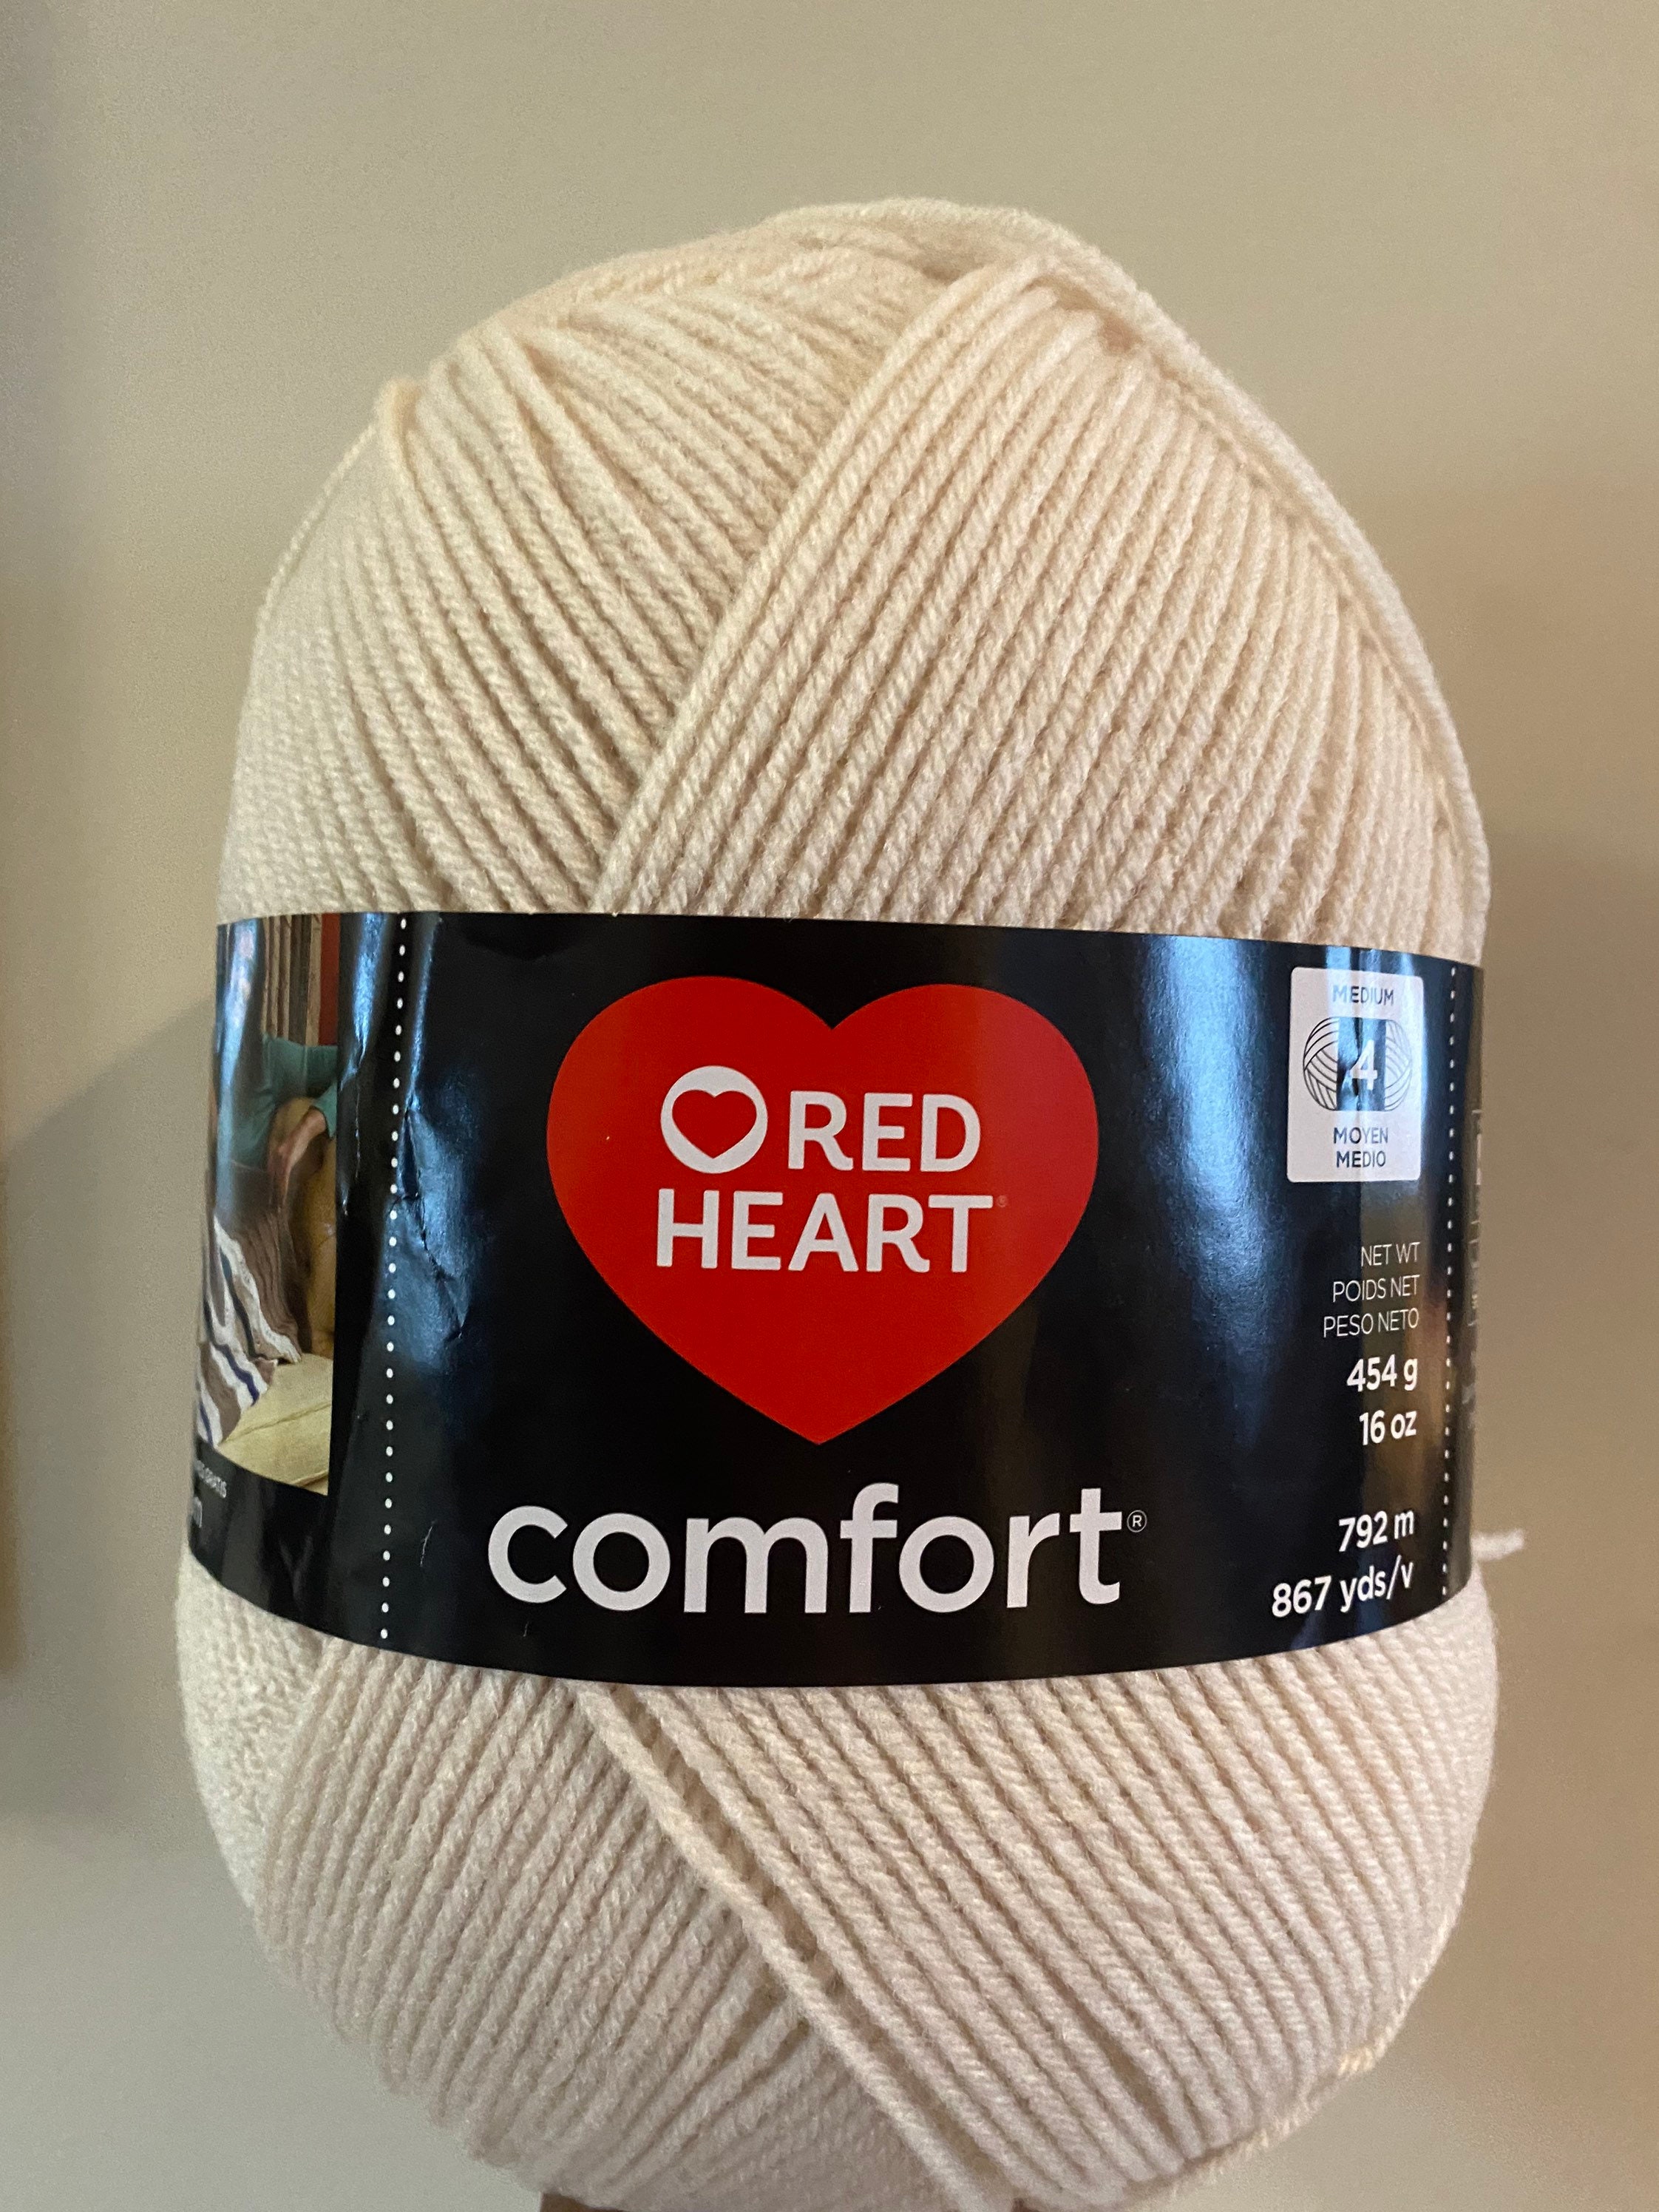 Red Heart Comfort Yarn - Grey